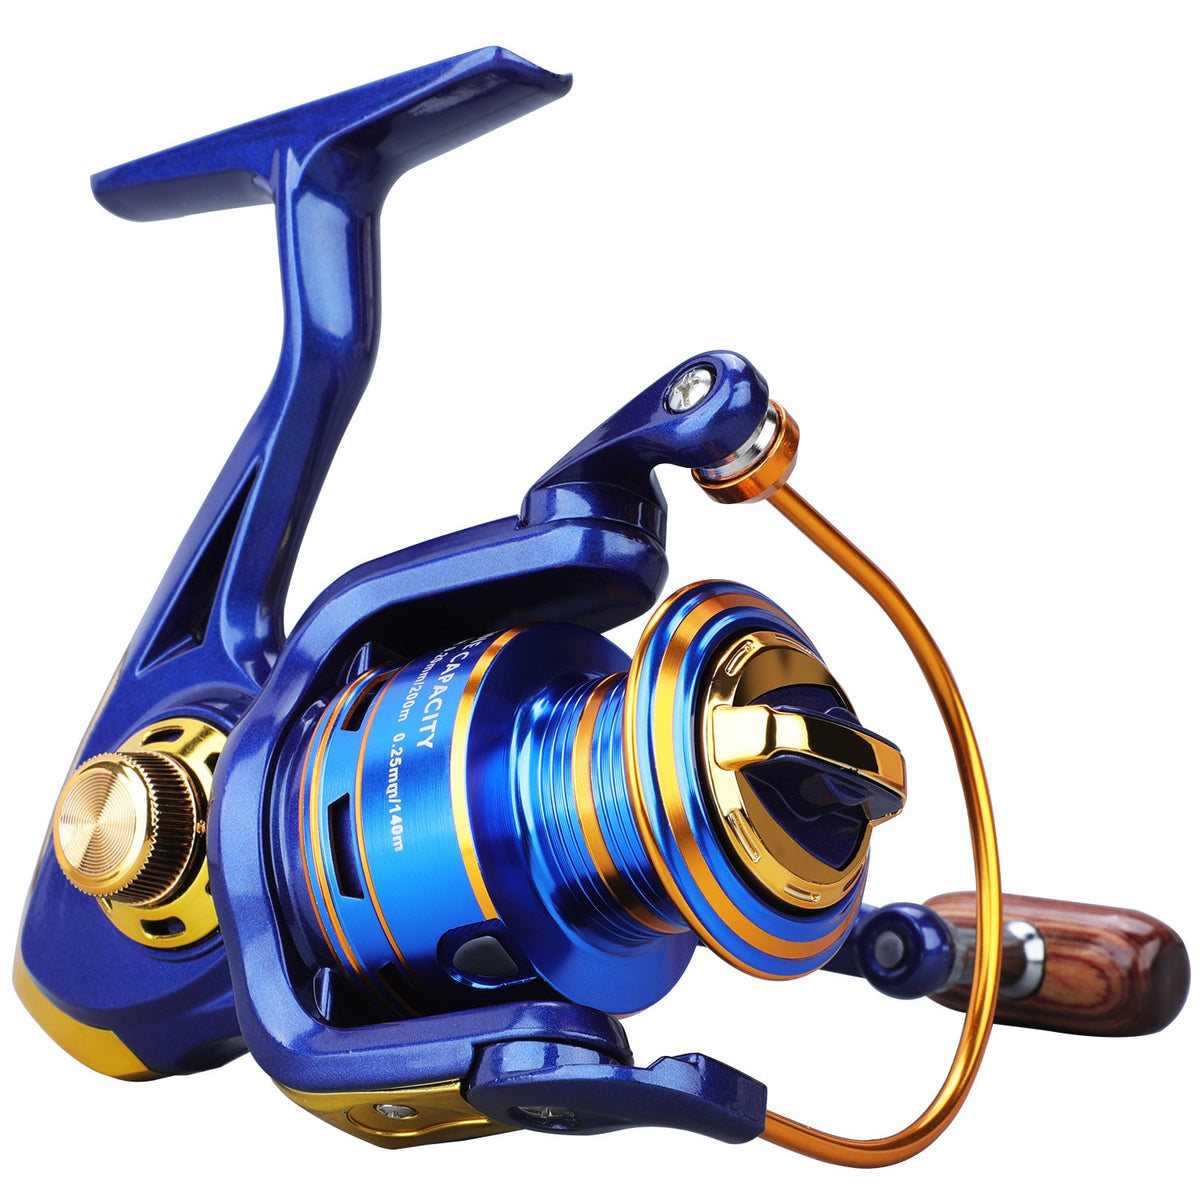 Sougayilang Spinning Fishing Reels 1000-5000 Series 5.2:1 Gear